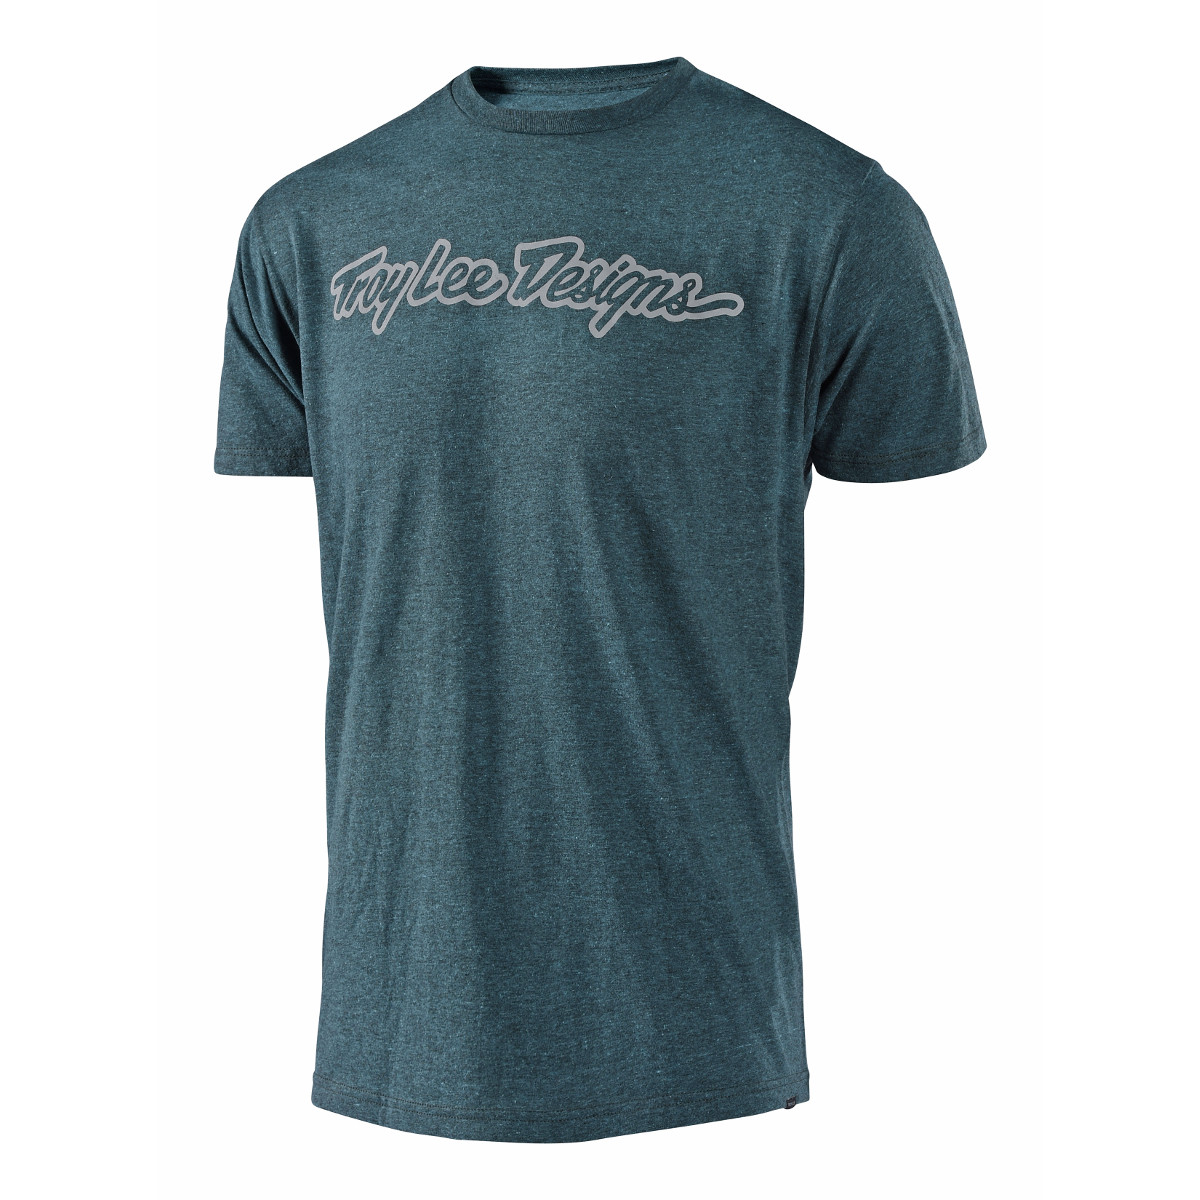 Troy Lee Designs T-Shirt Signature Jade meliert